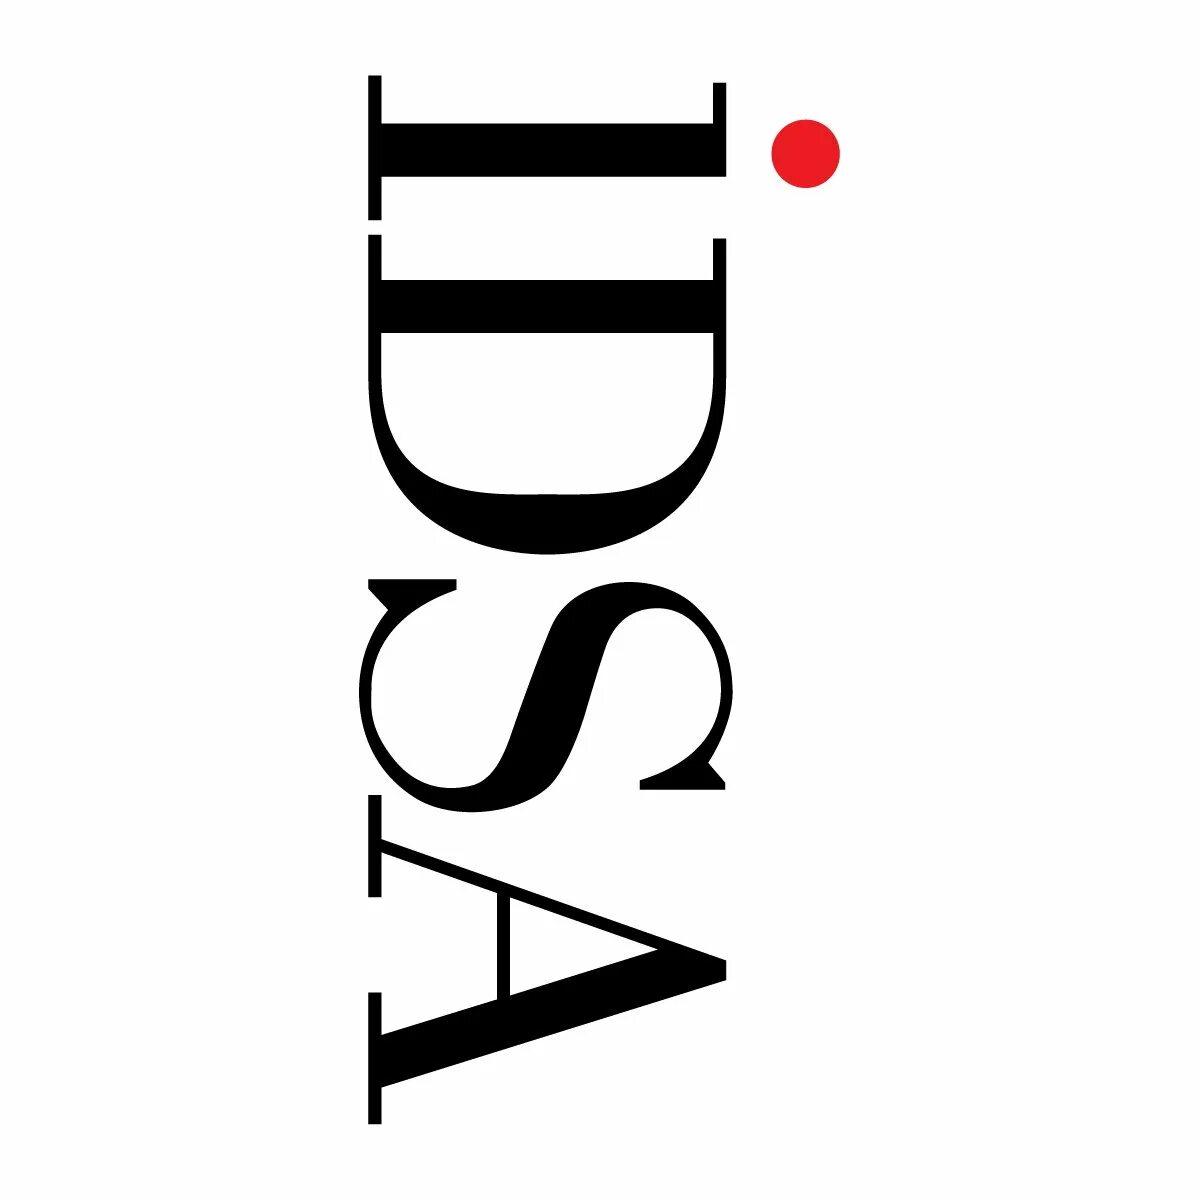 Design society. IDSA.